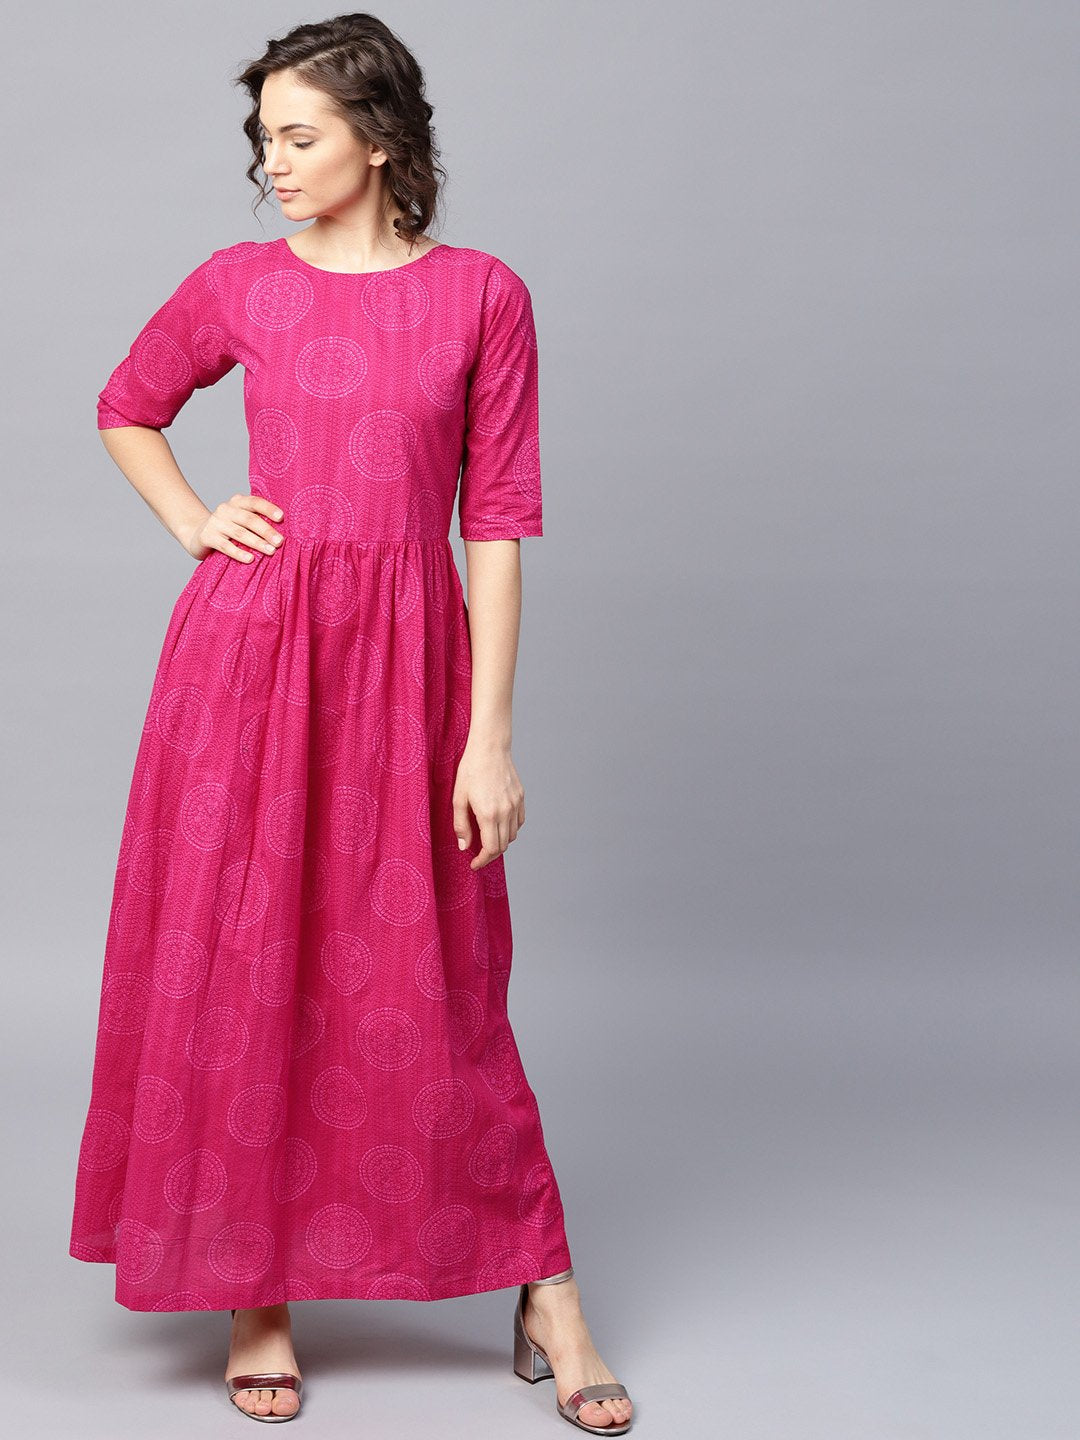 Women's Pink Printed Half Sleeve Cotton Flared Maxi Dress - Nayo Clothing